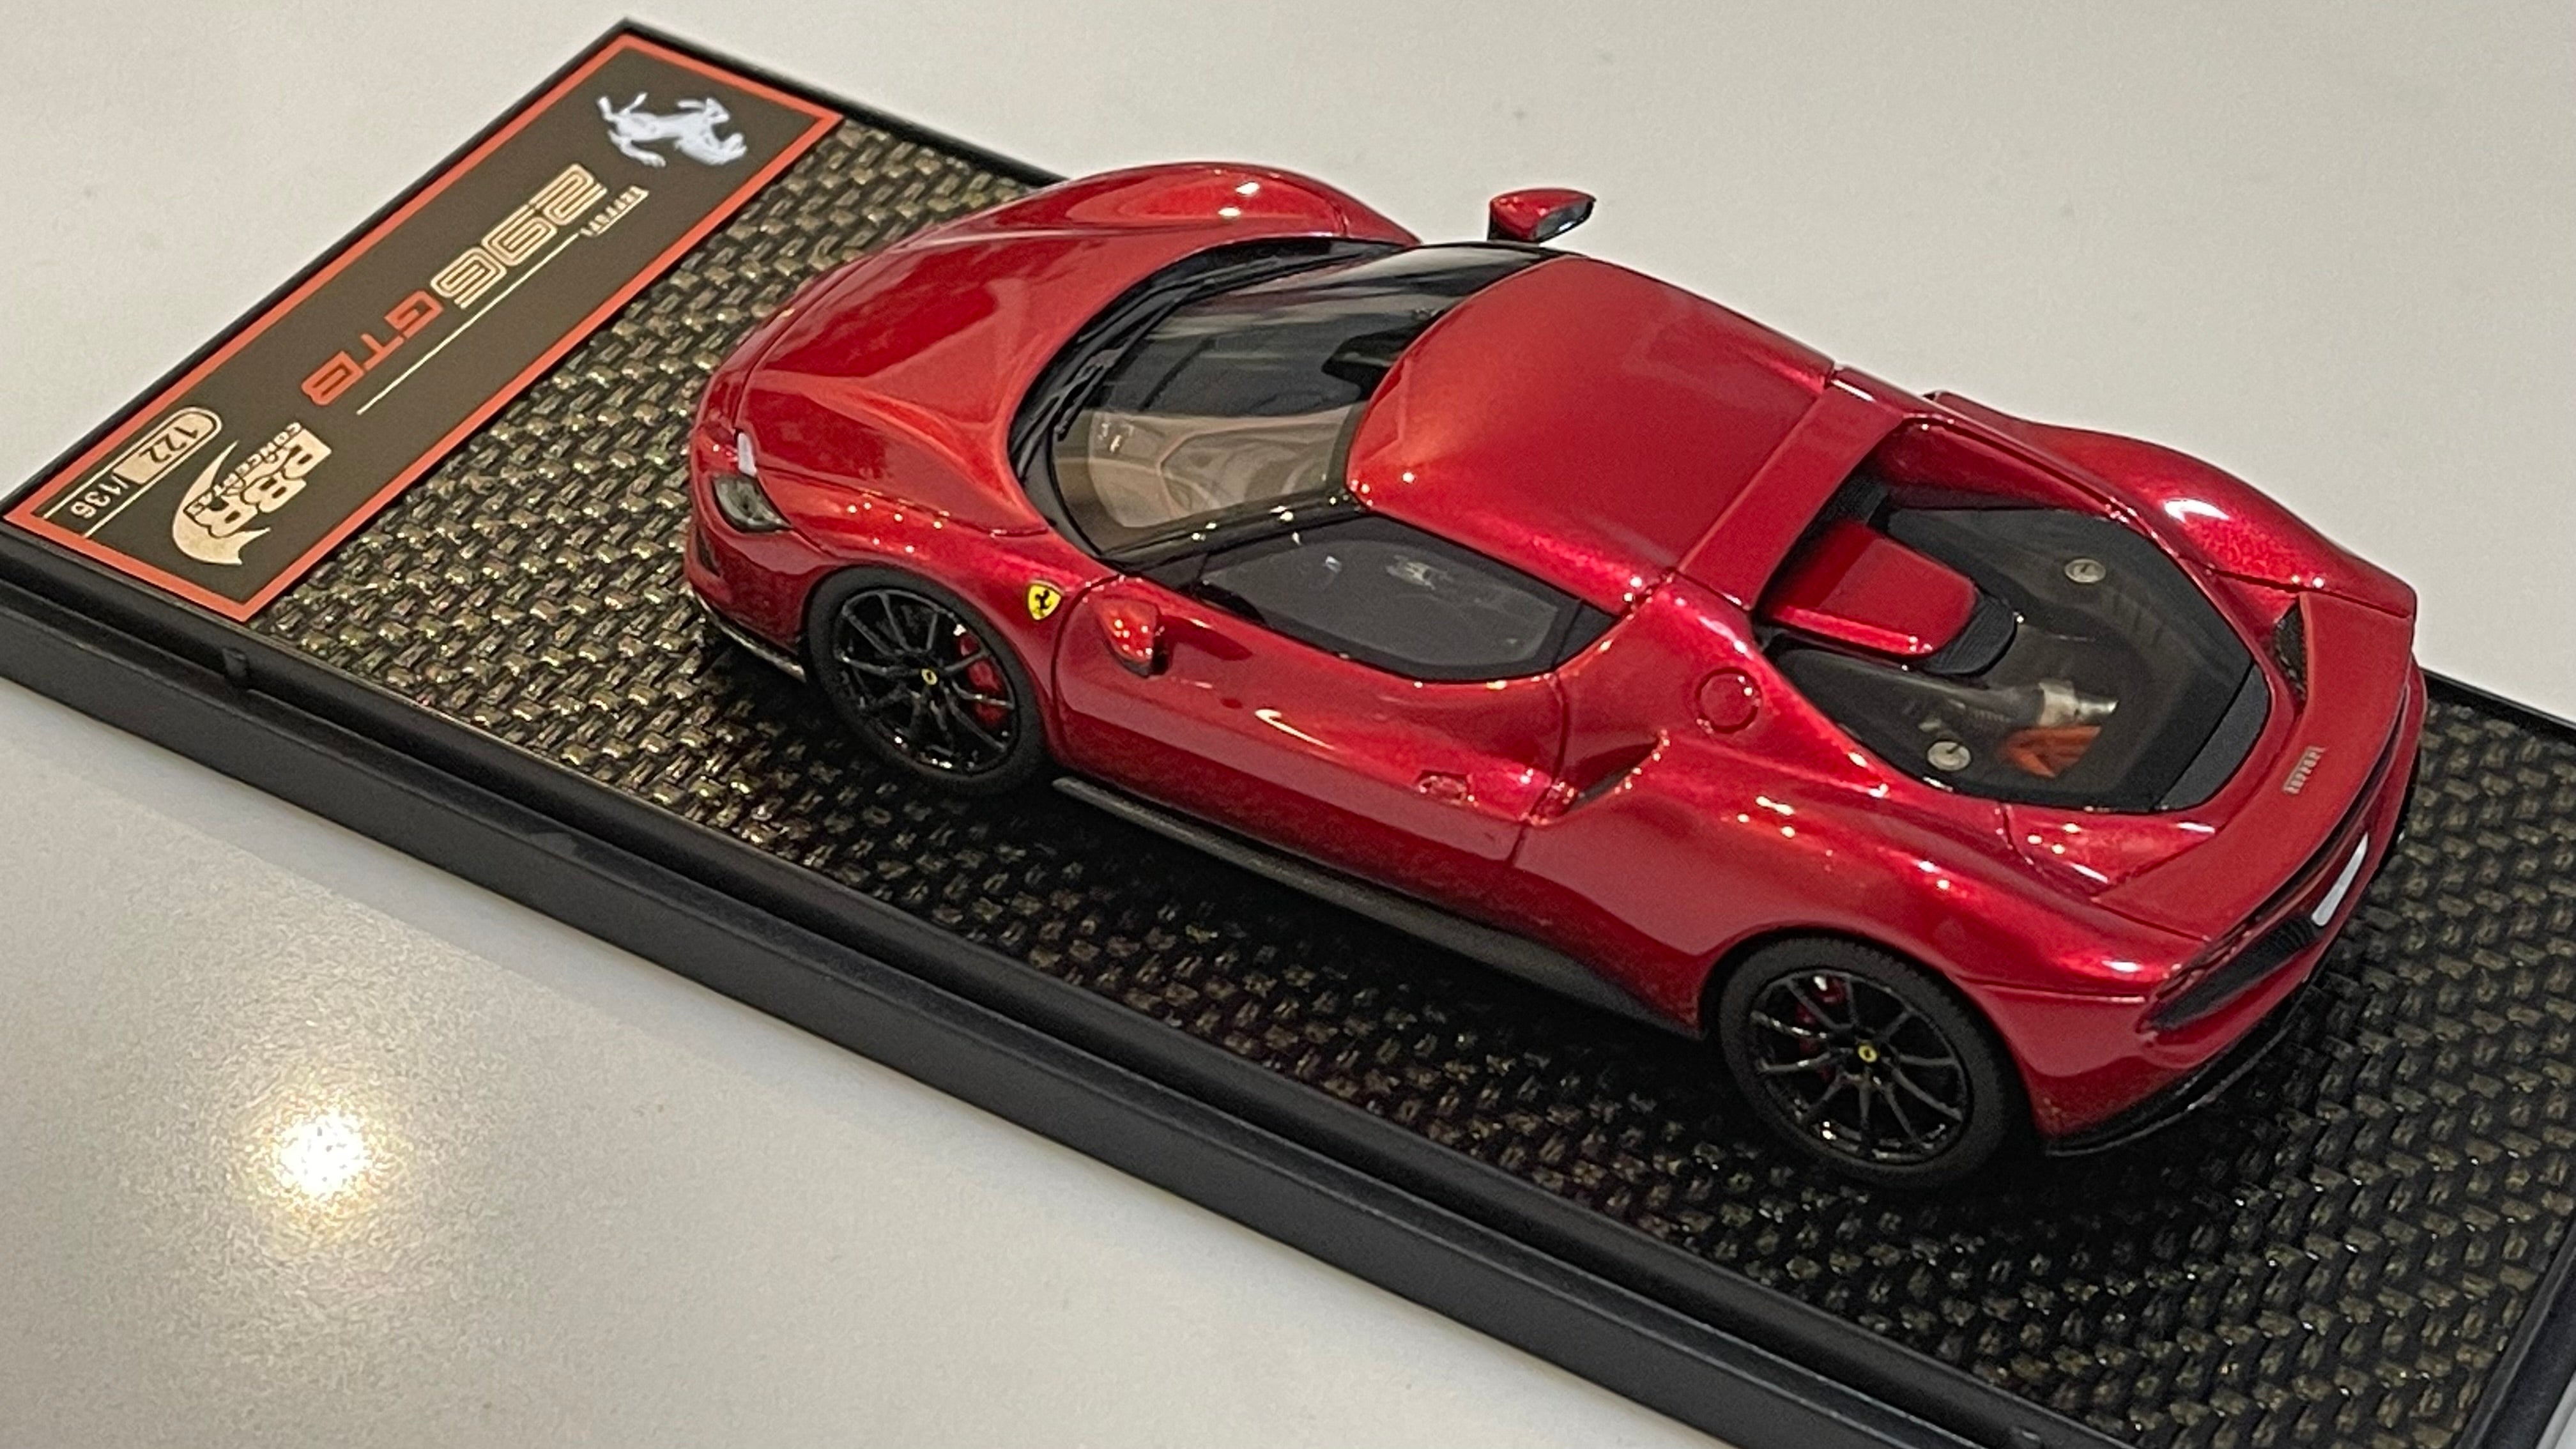 1:43 scale Ferrari 296 GTB model